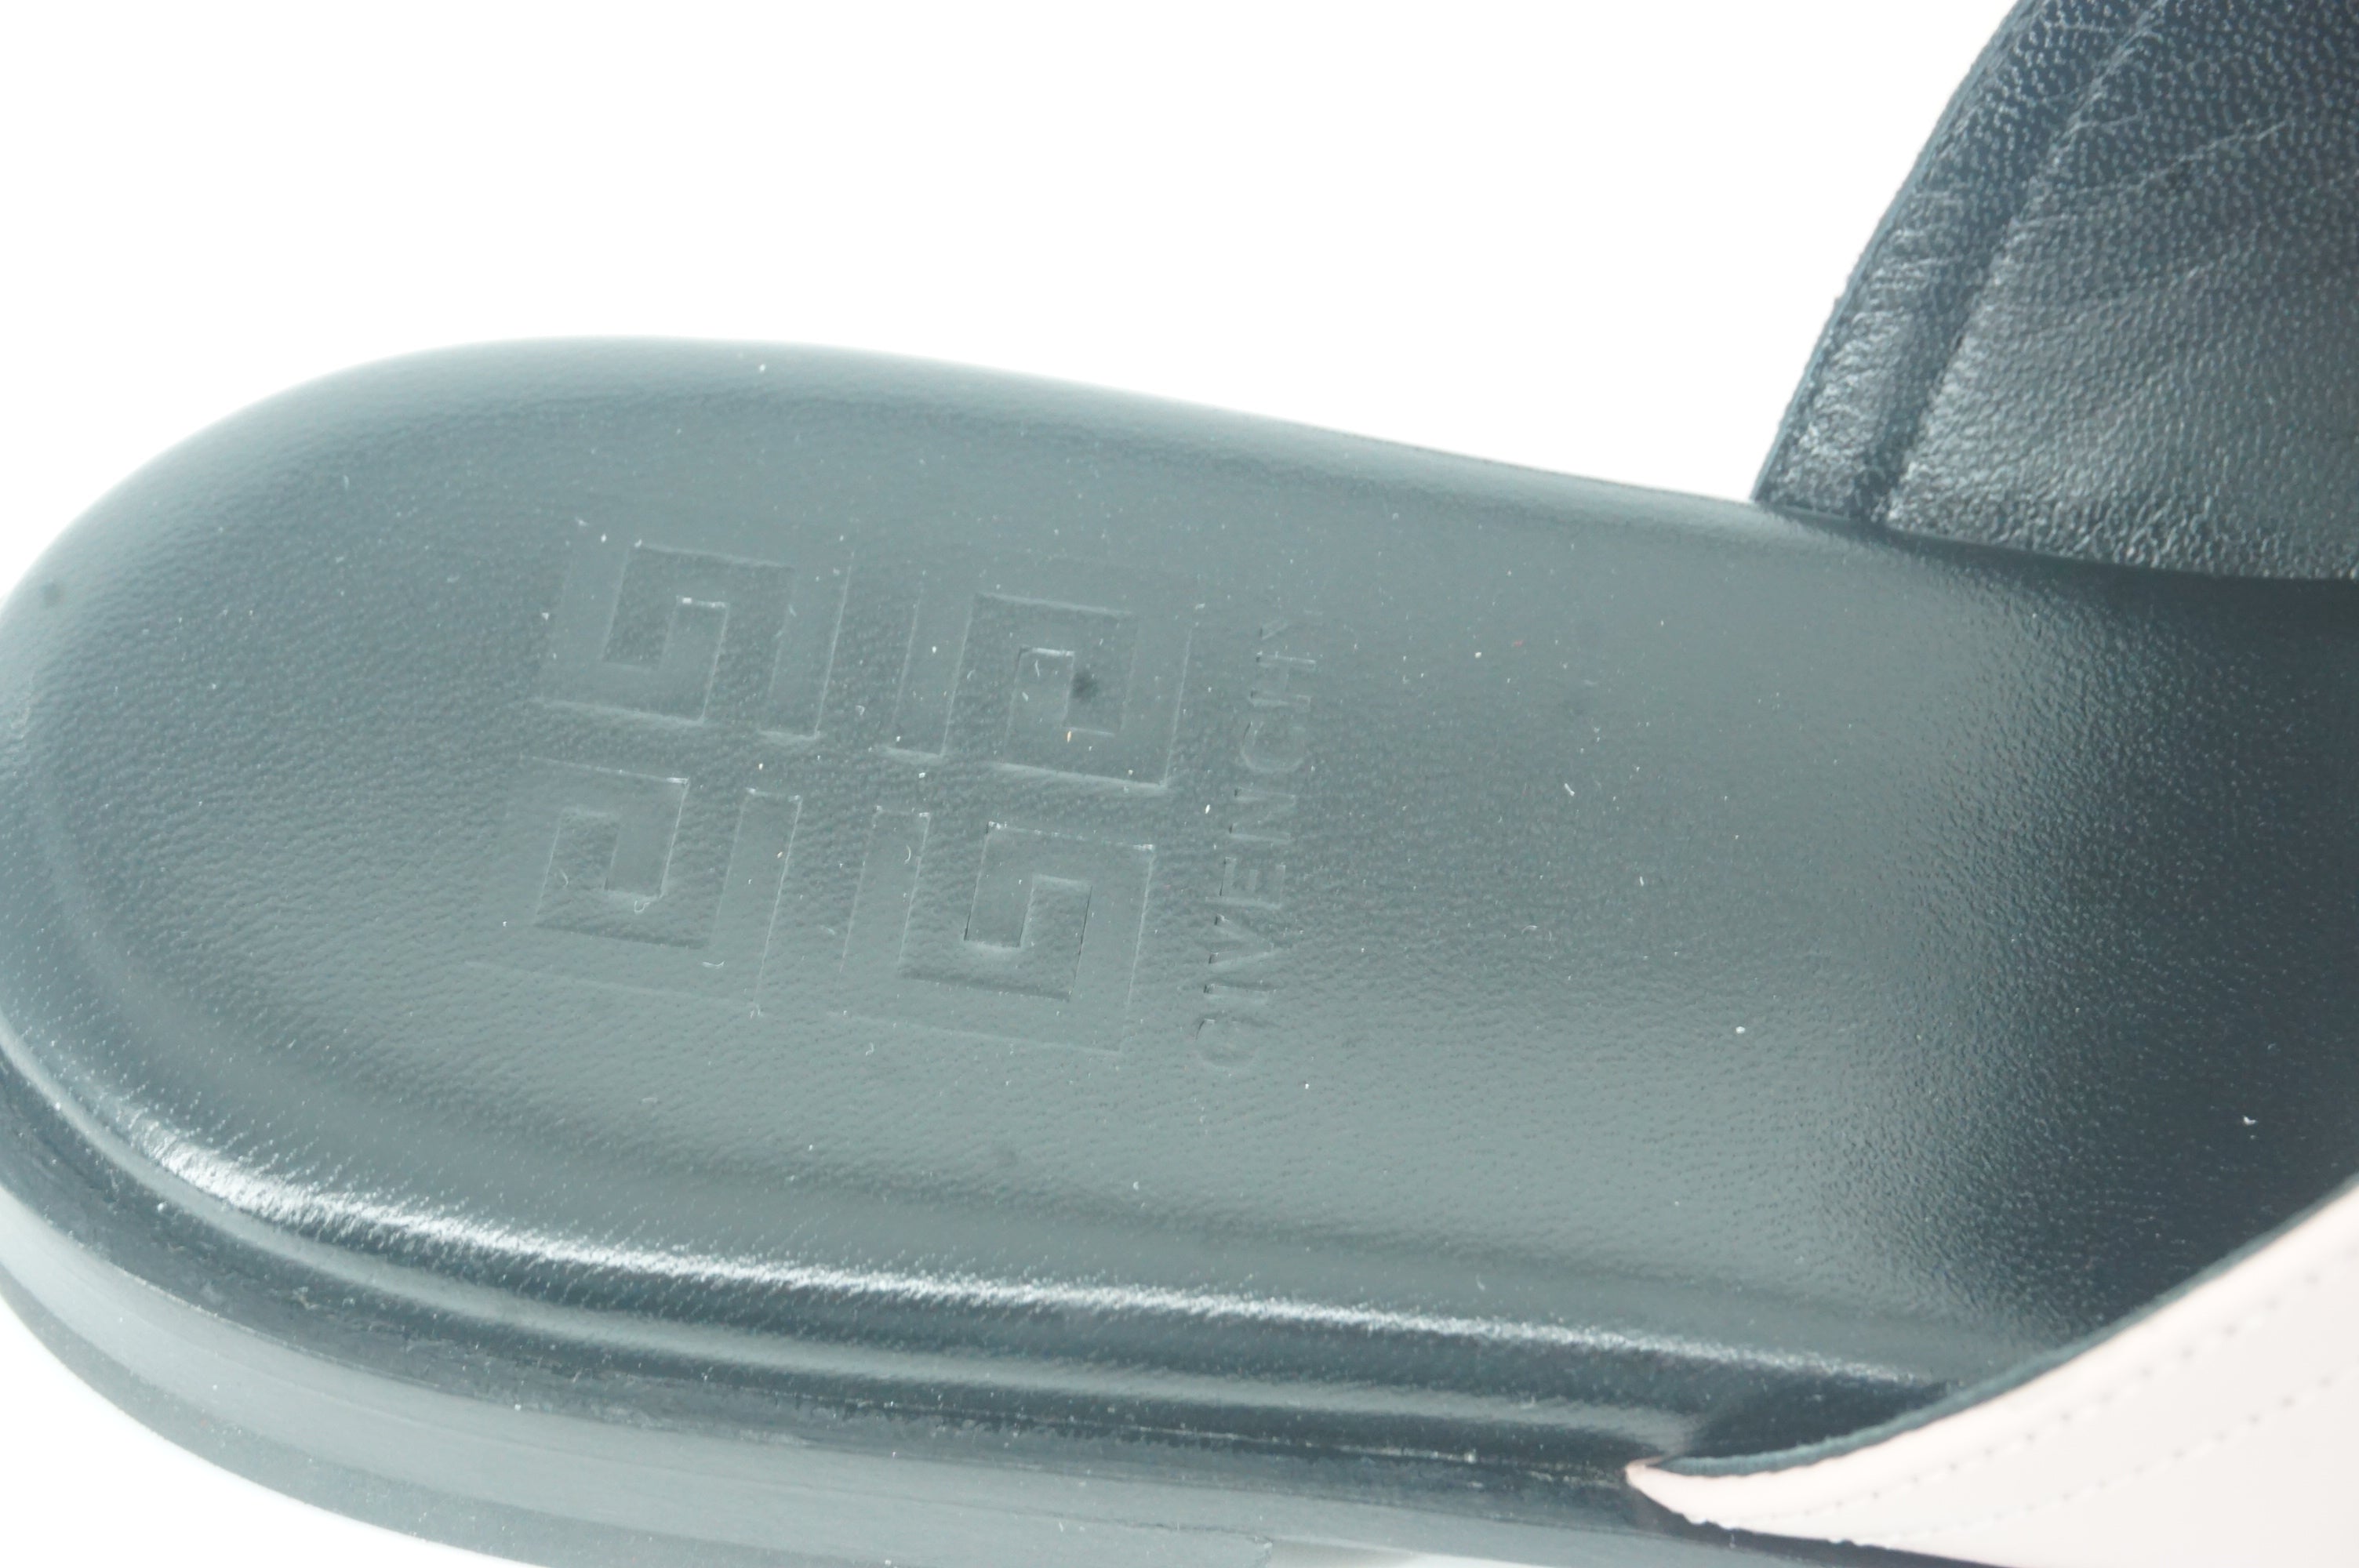 Givenchy 4G Pink Black Logo Flat Mule Slide Sandals SZ 36.5 NIB $825